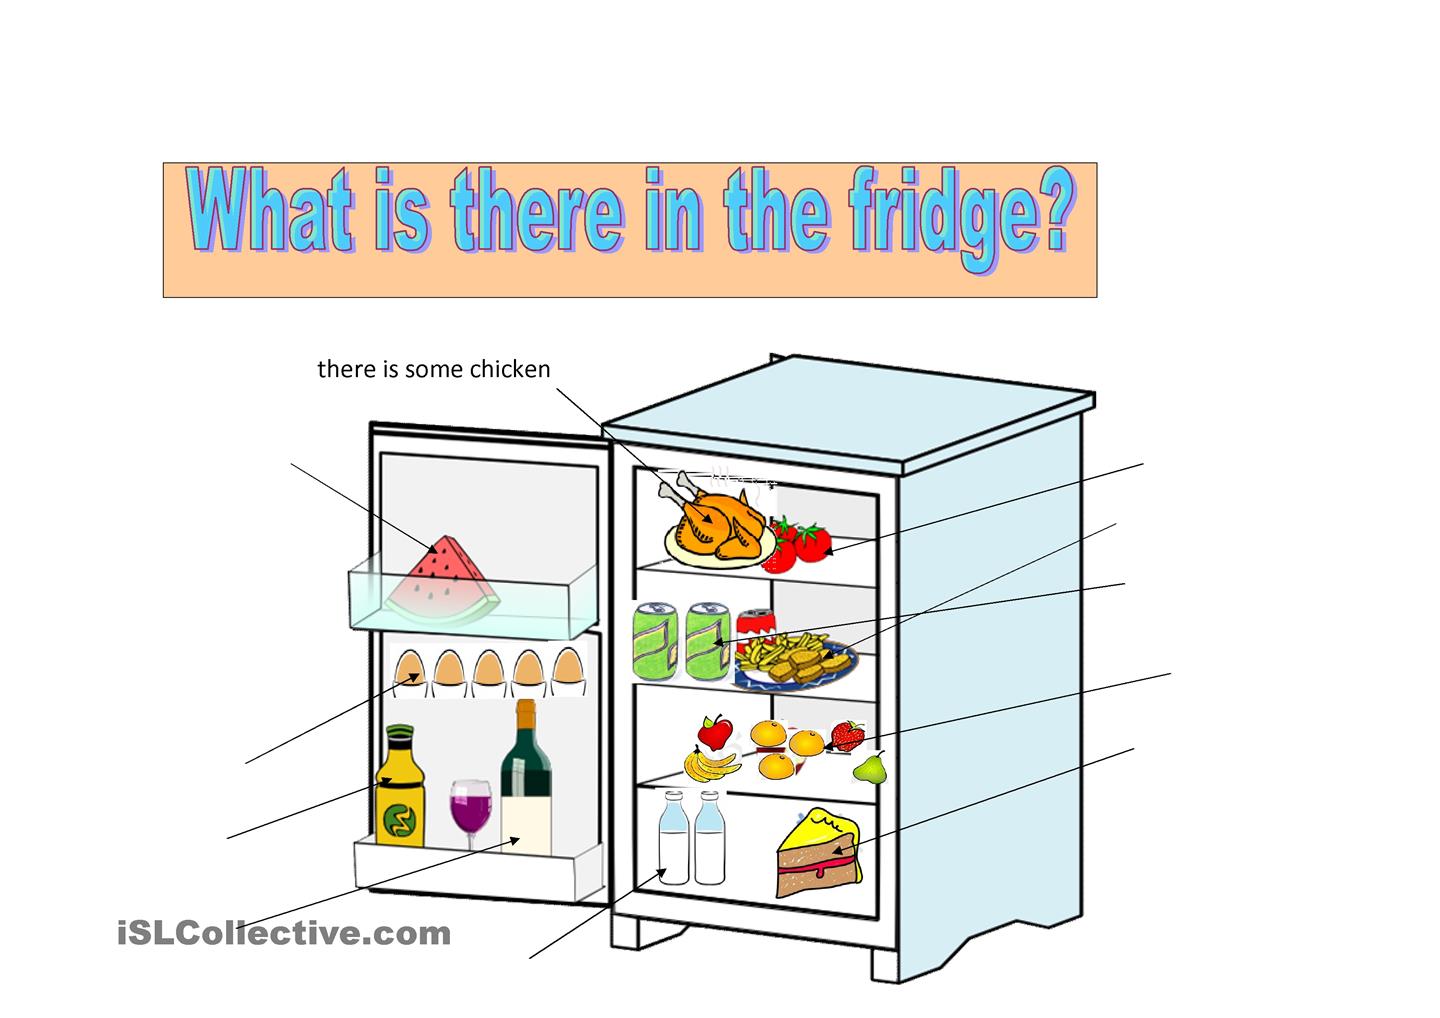 There is some fruit. Холодильник с продуктами для английского языка. Холодильник по английскому. Холодильник с продуктами для описания. Холодильник с едой на английском.